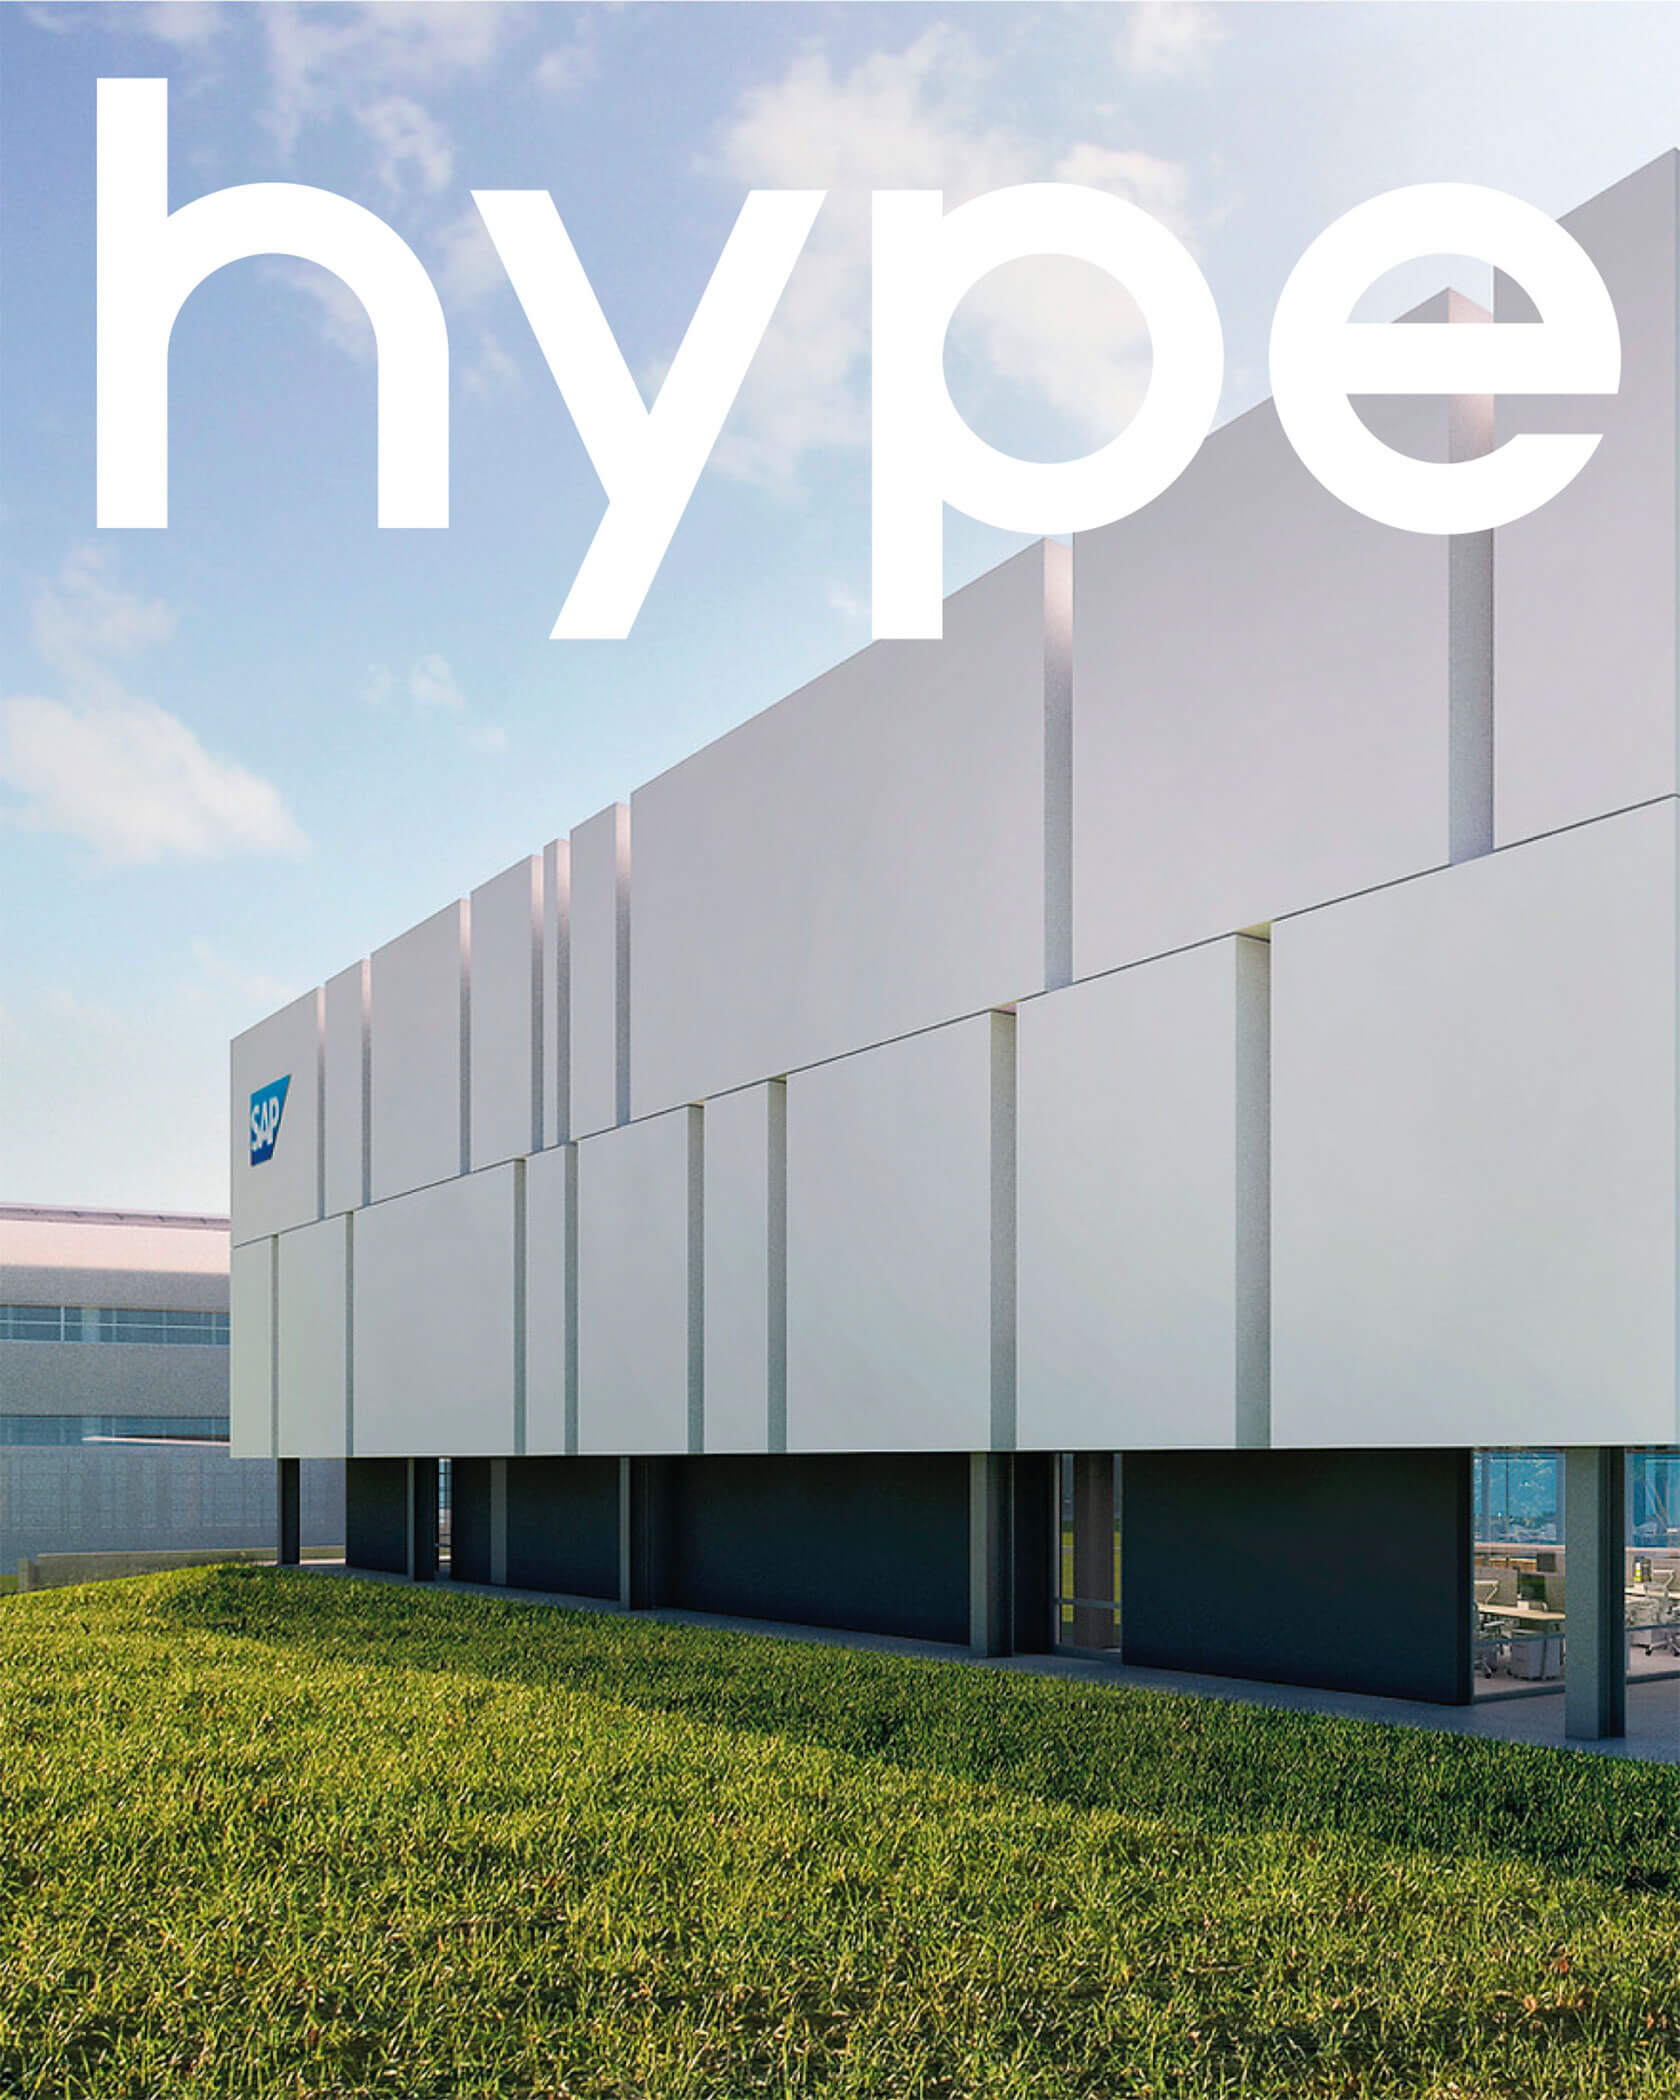 Hype建築事務所品牌視覺設計